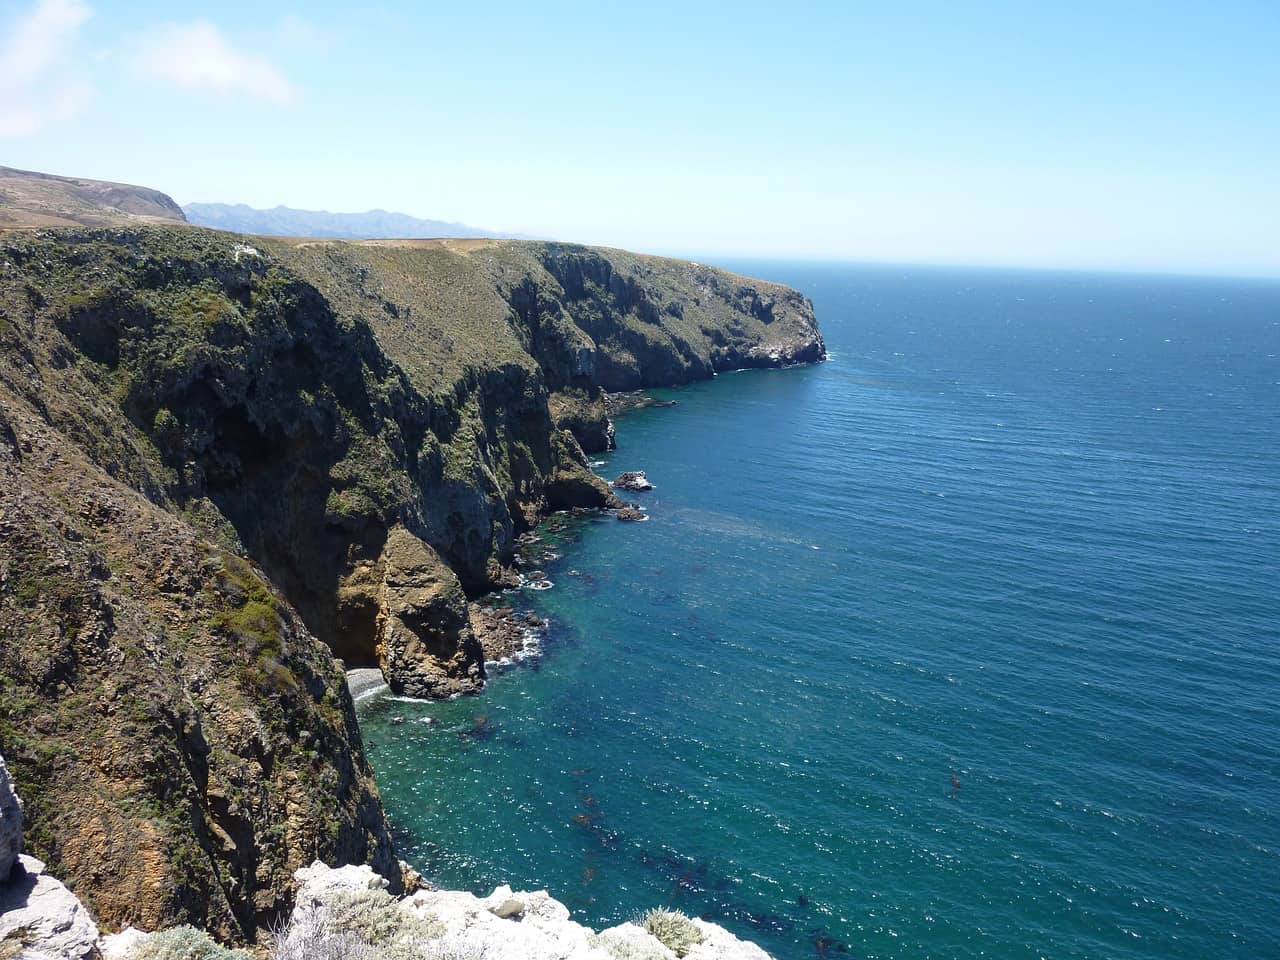 Santa Cruz Island, part of the Channel Islands. Image source: Pixabay user benstorm.